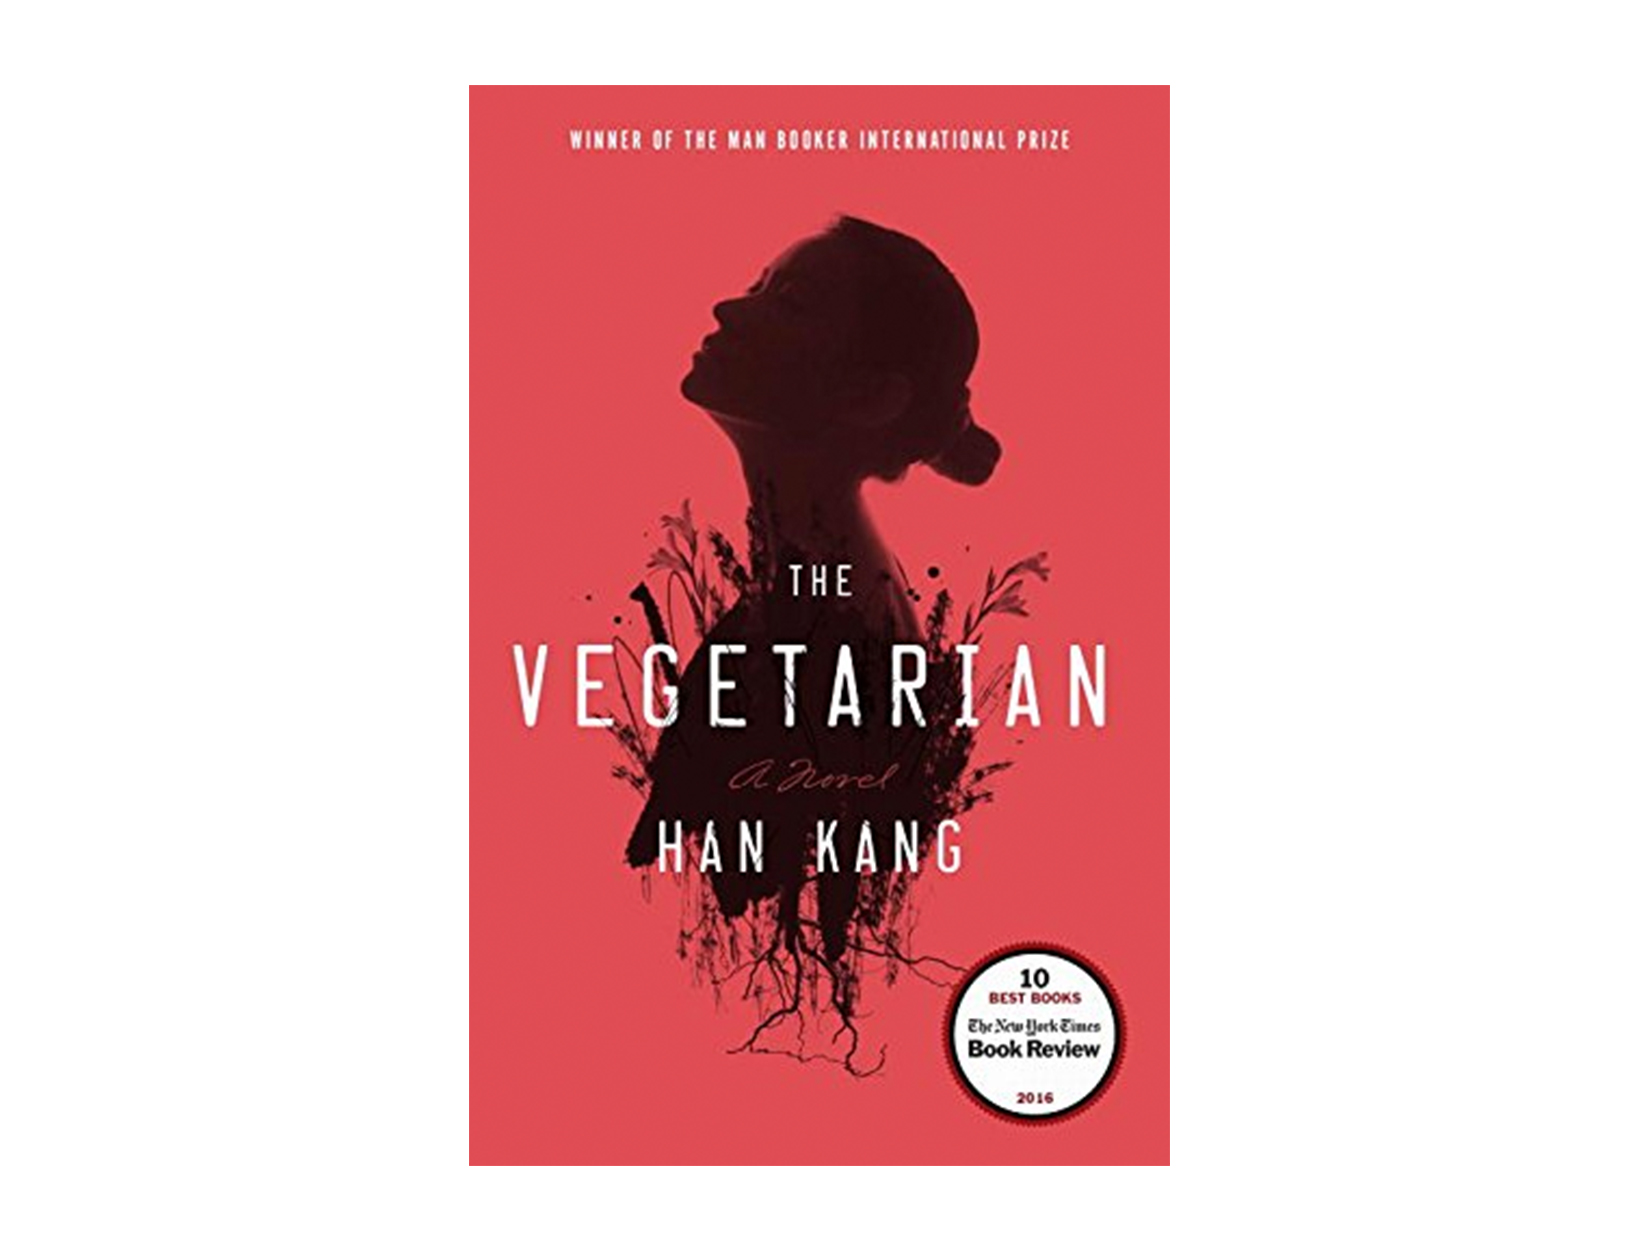 The Vegetarian by Han Kang